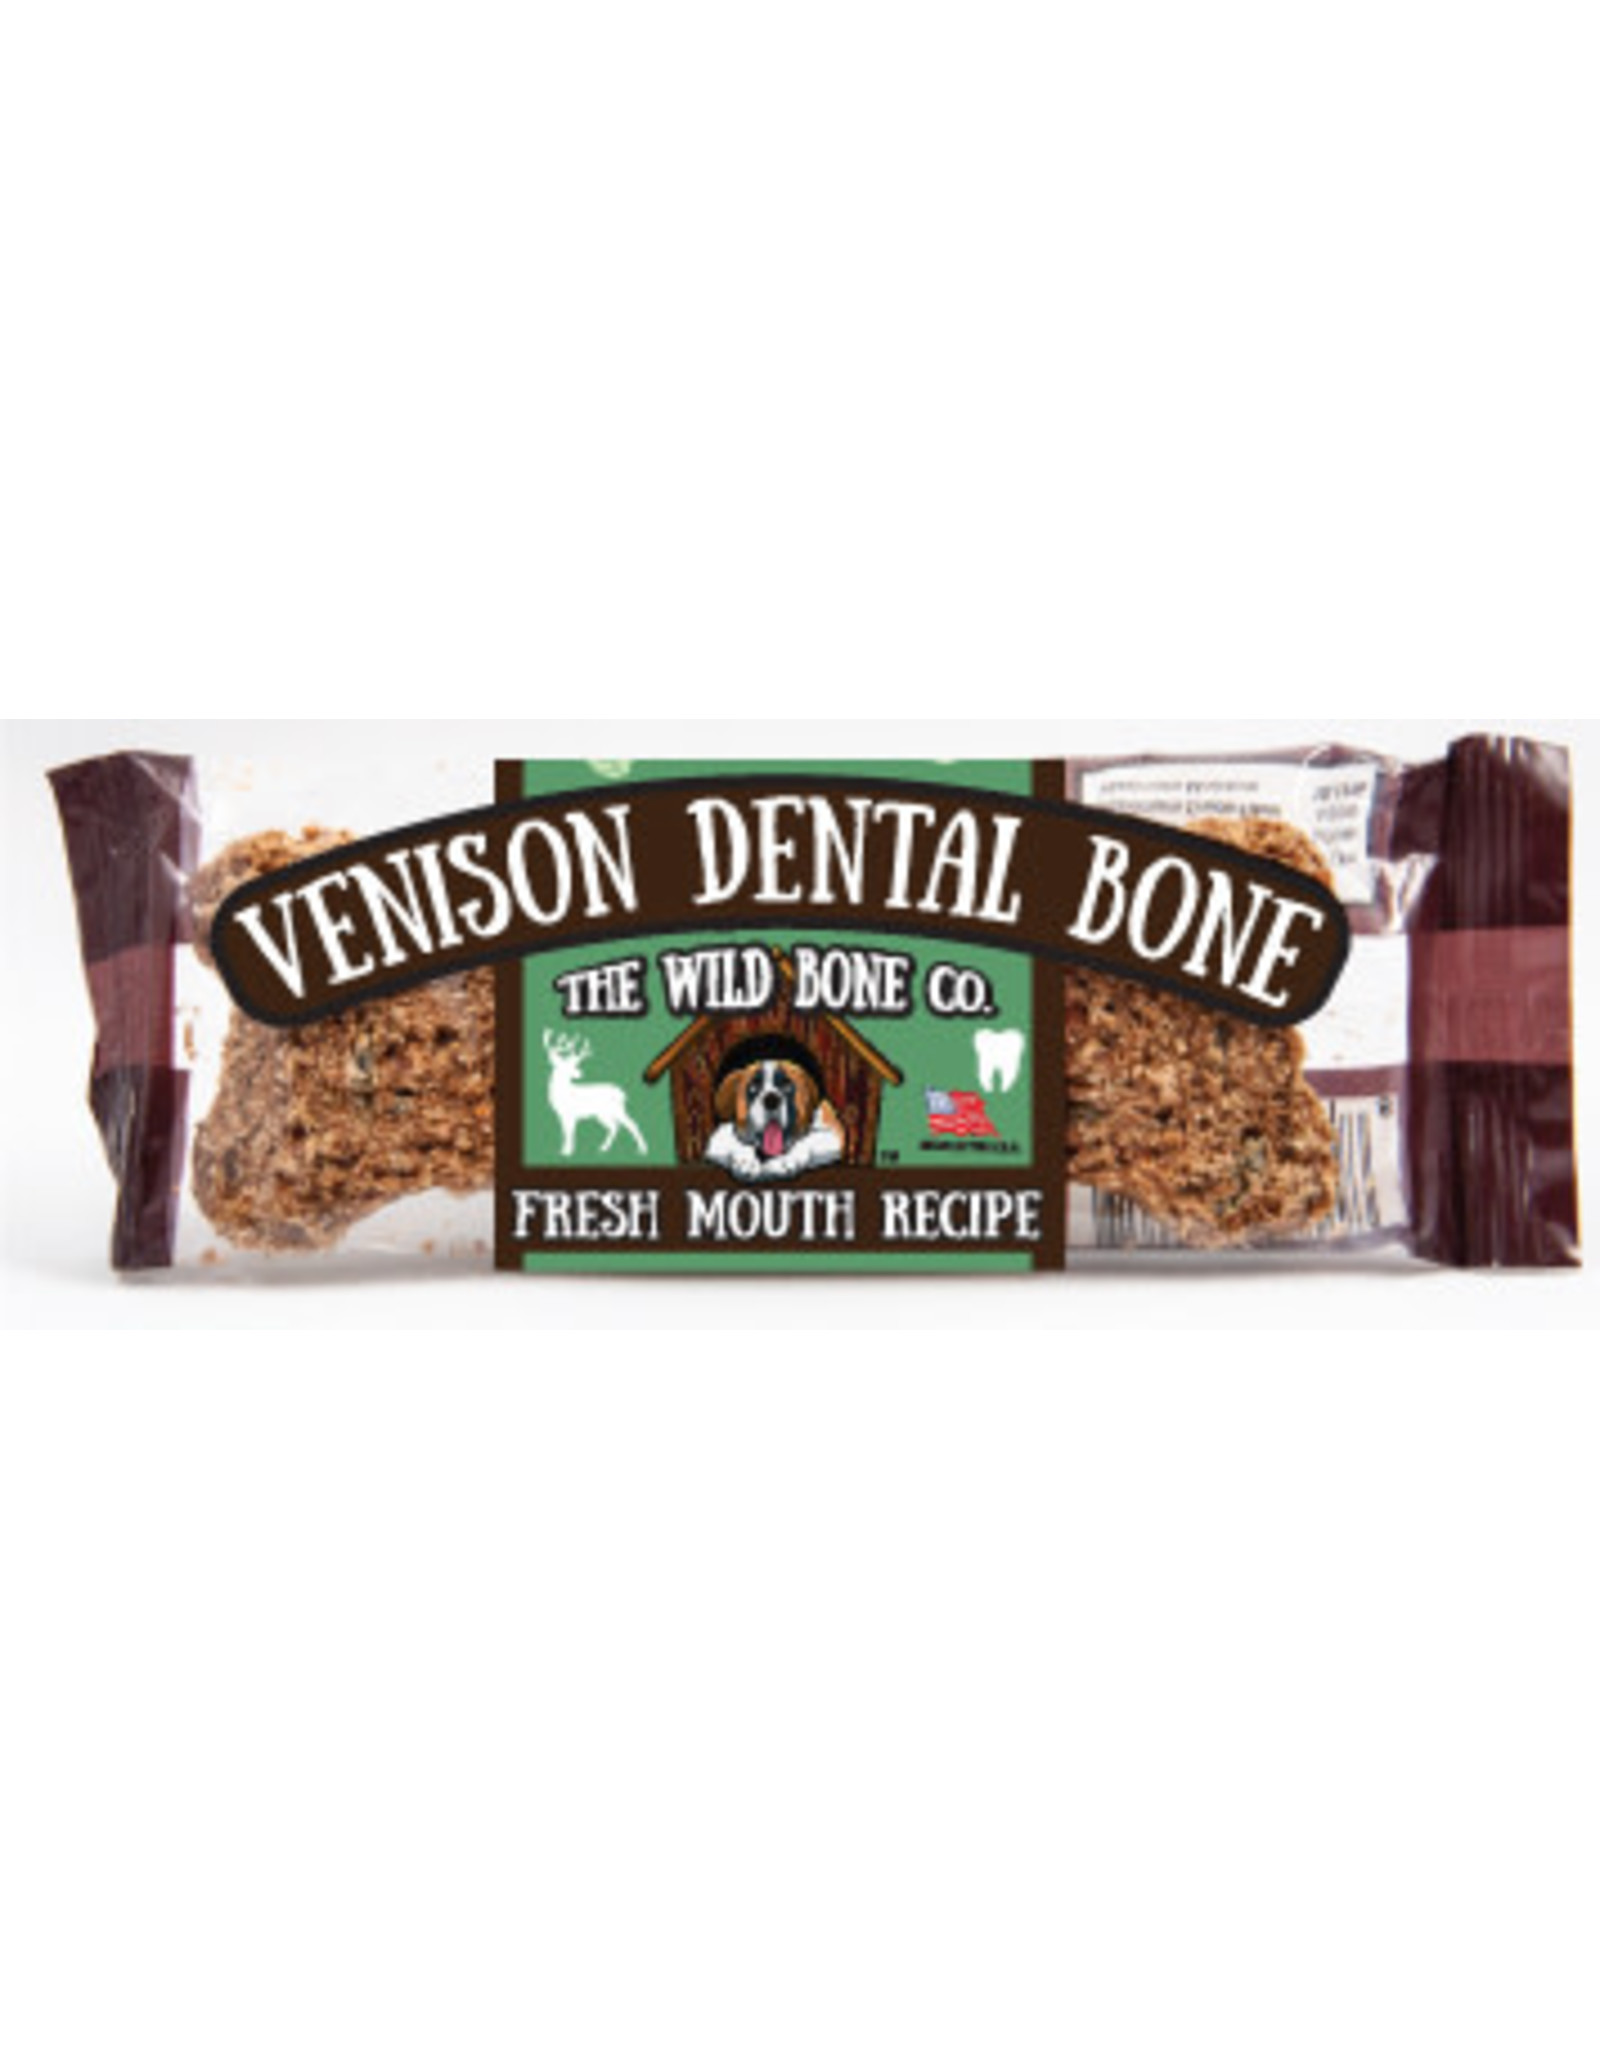 The Wild Bone Co. The Wild Bone Co. Venison Dental Bone Fresh Mouth Recipe 1oz